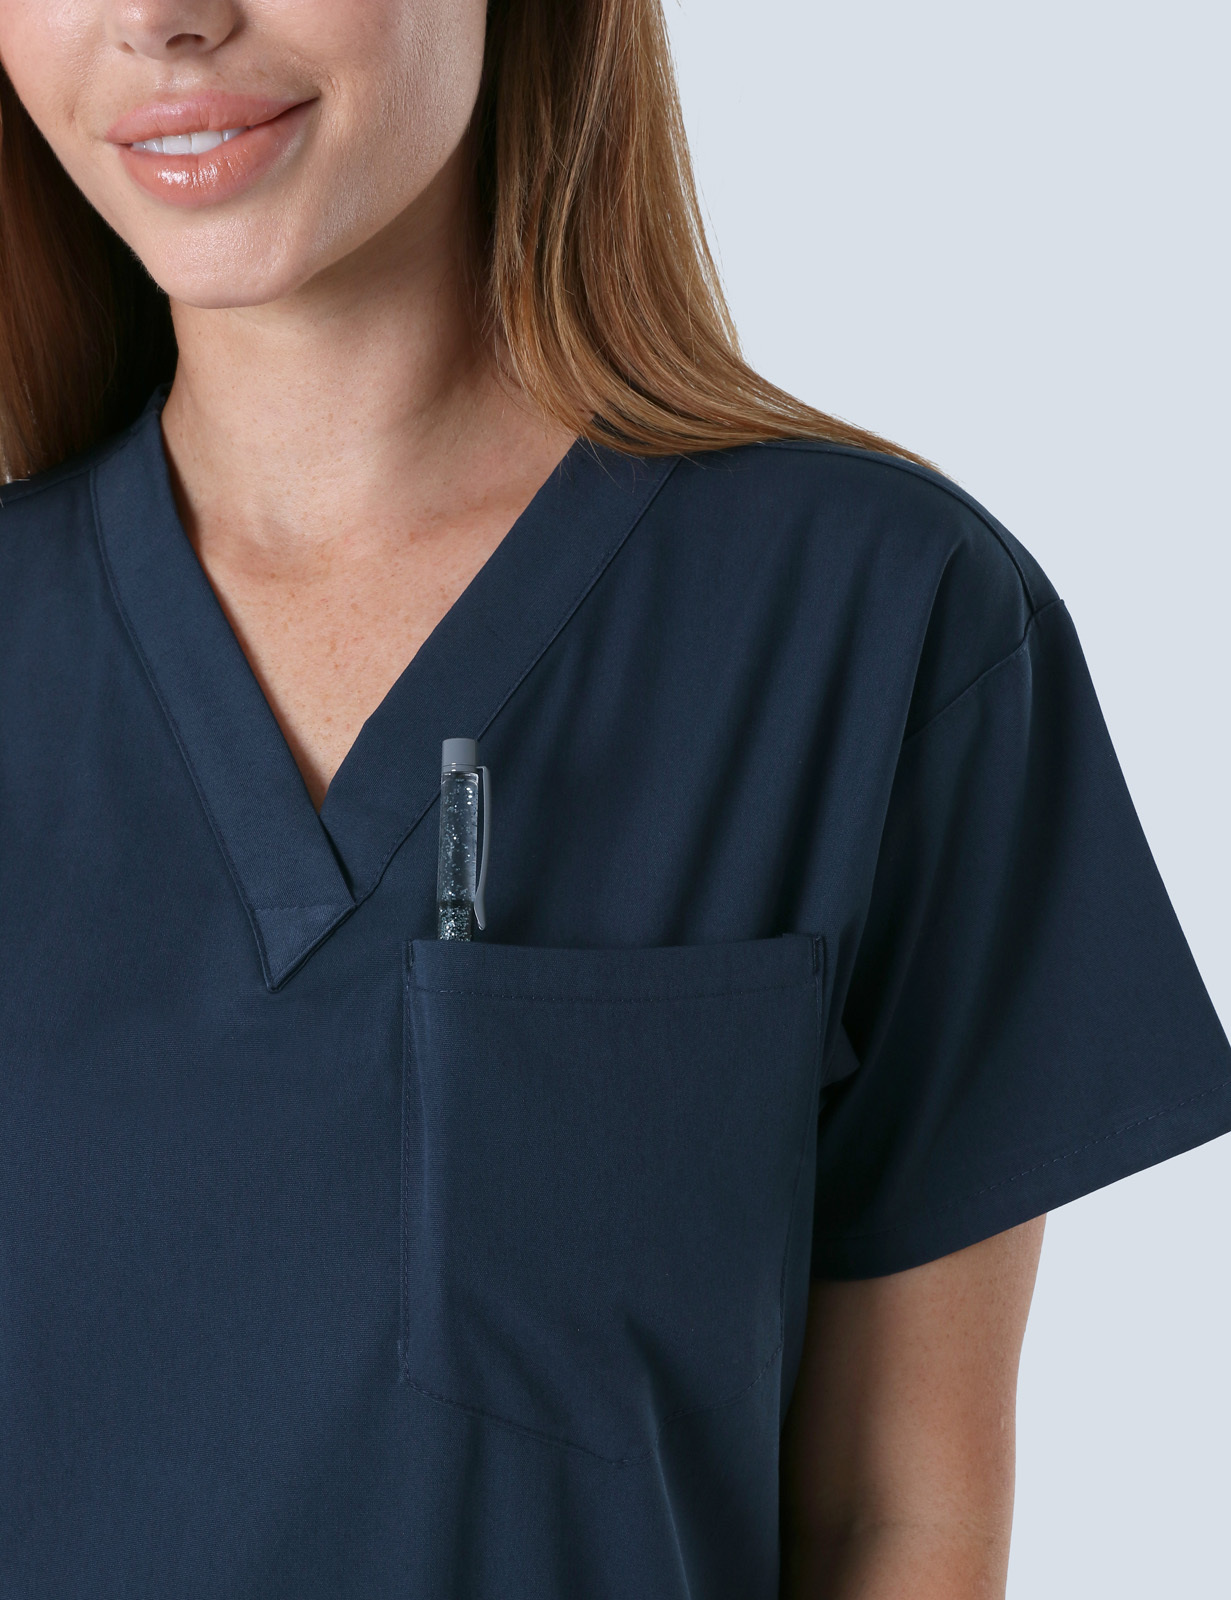 Bundaberg Hospital - MI Admin (4 Pocket Scrub Top and Cargo Pants in Navy incl Logos)